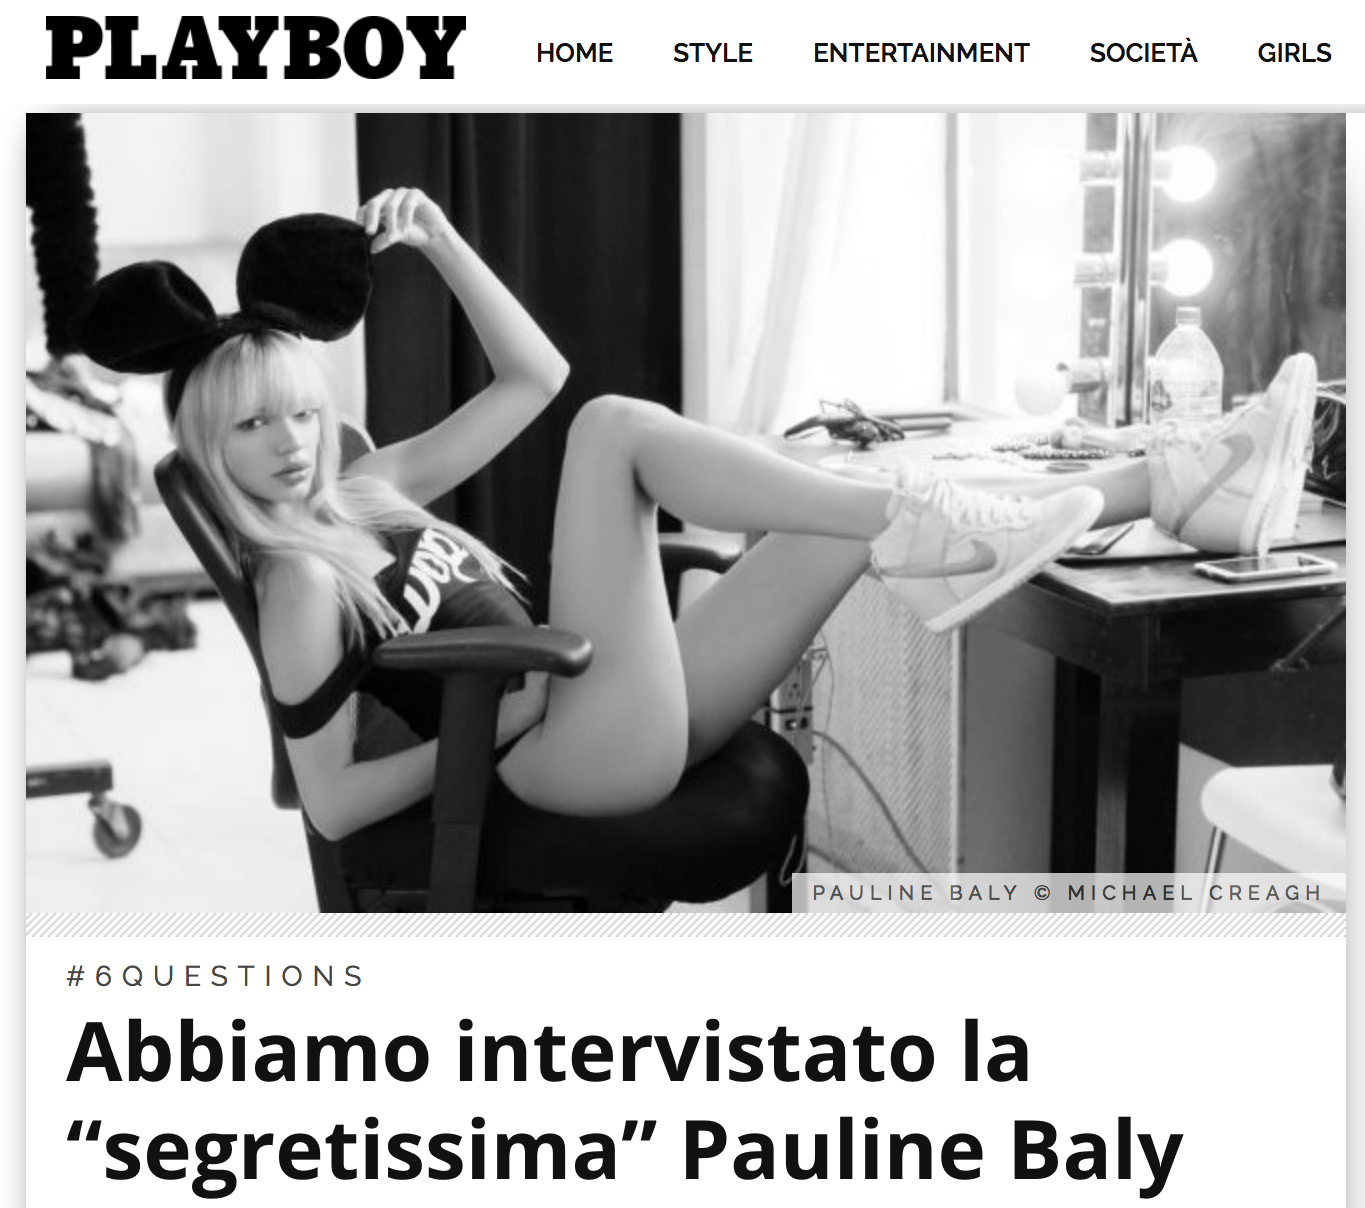 PaulineBaly_MichaelCreagh_Playboy